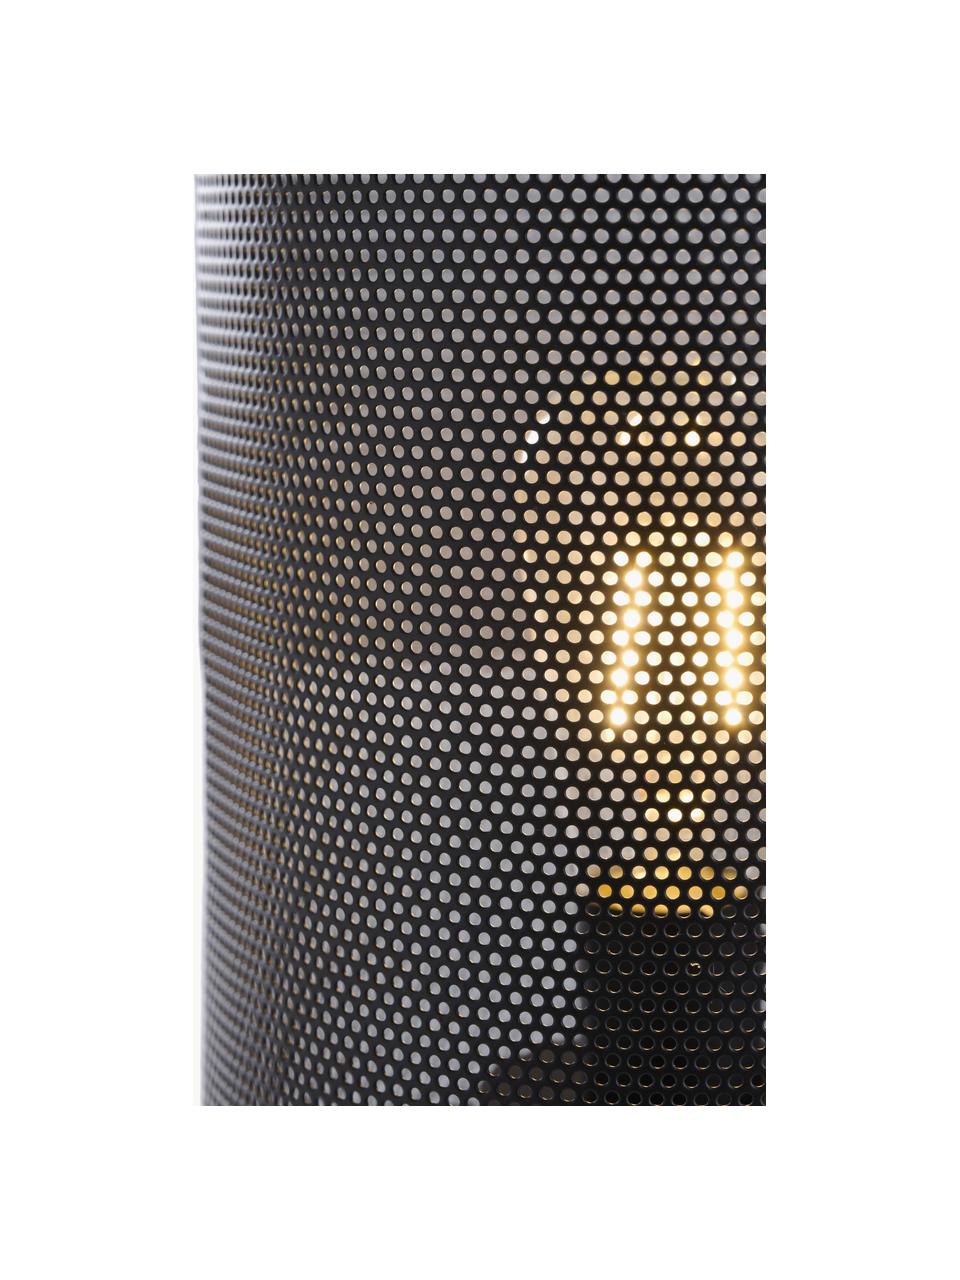 Lámpara de mesa para exterior LED Evening, portátil, Plástico, metal recubierto, Negro, Ø 15 x Al 33 cm